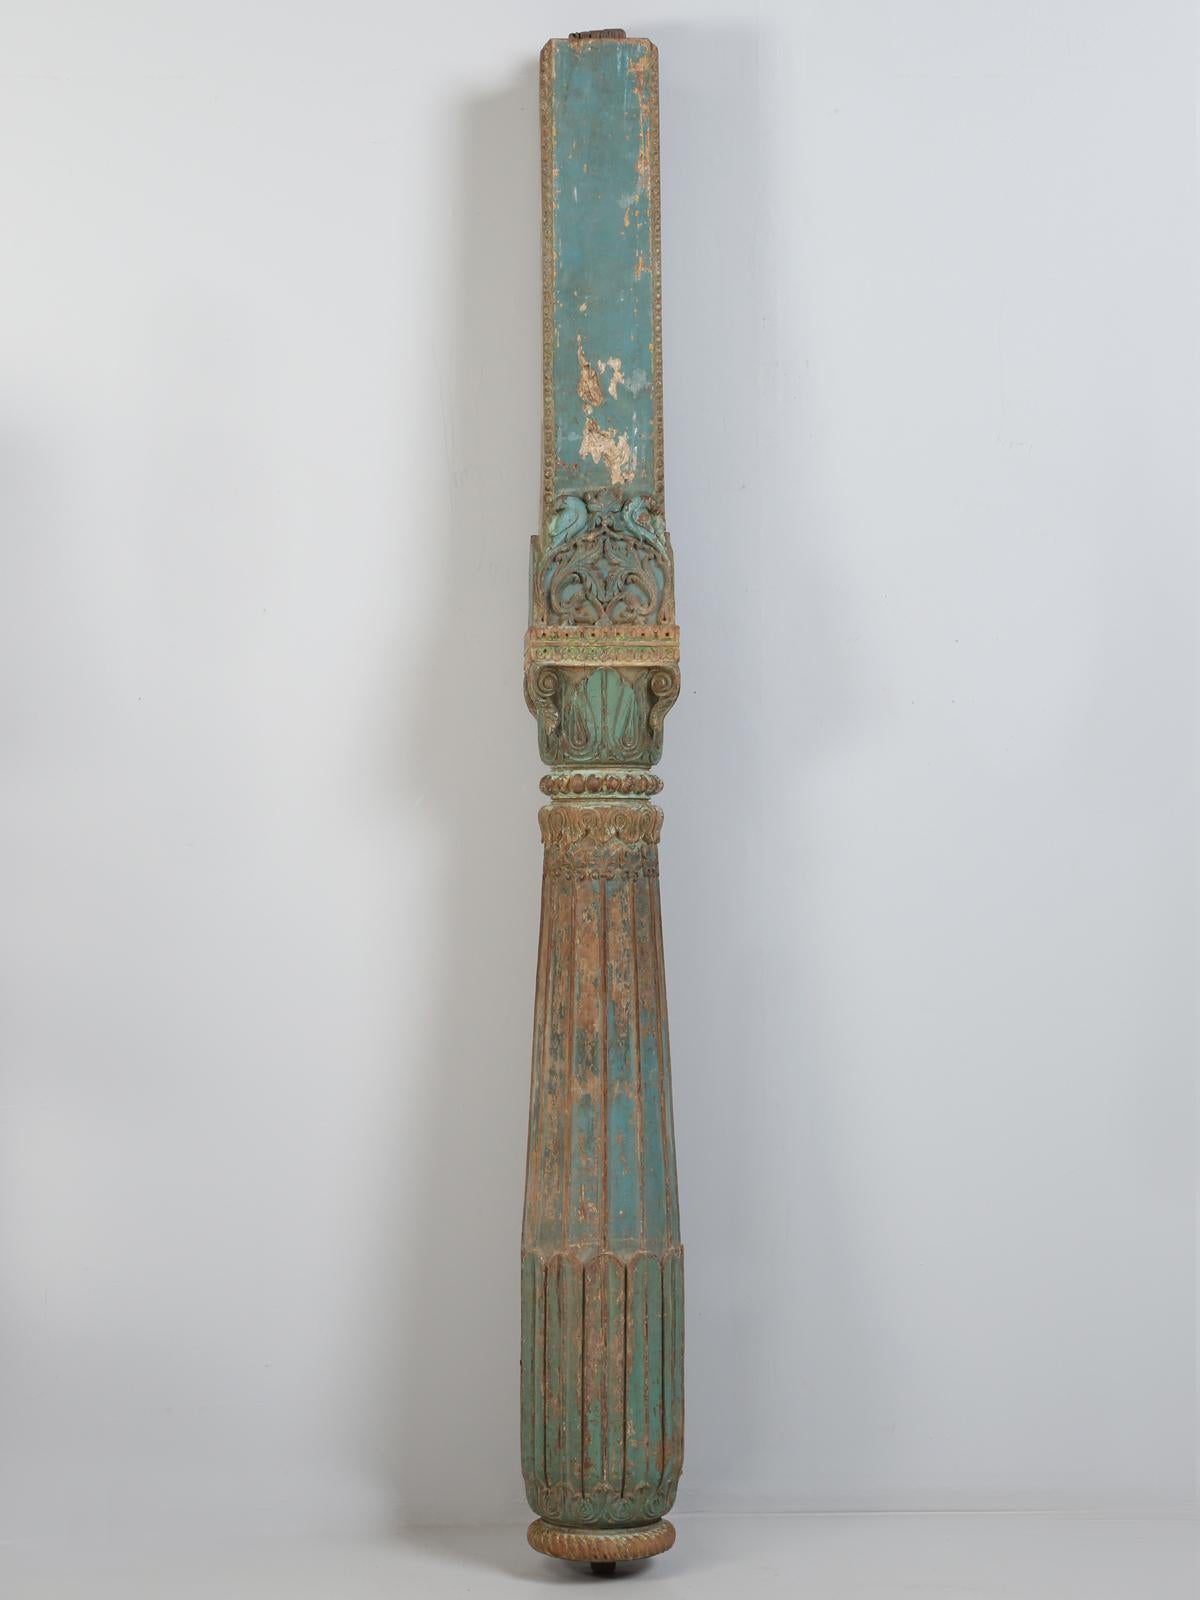 Indian Antique Teakwood Column from India, circa 1800s